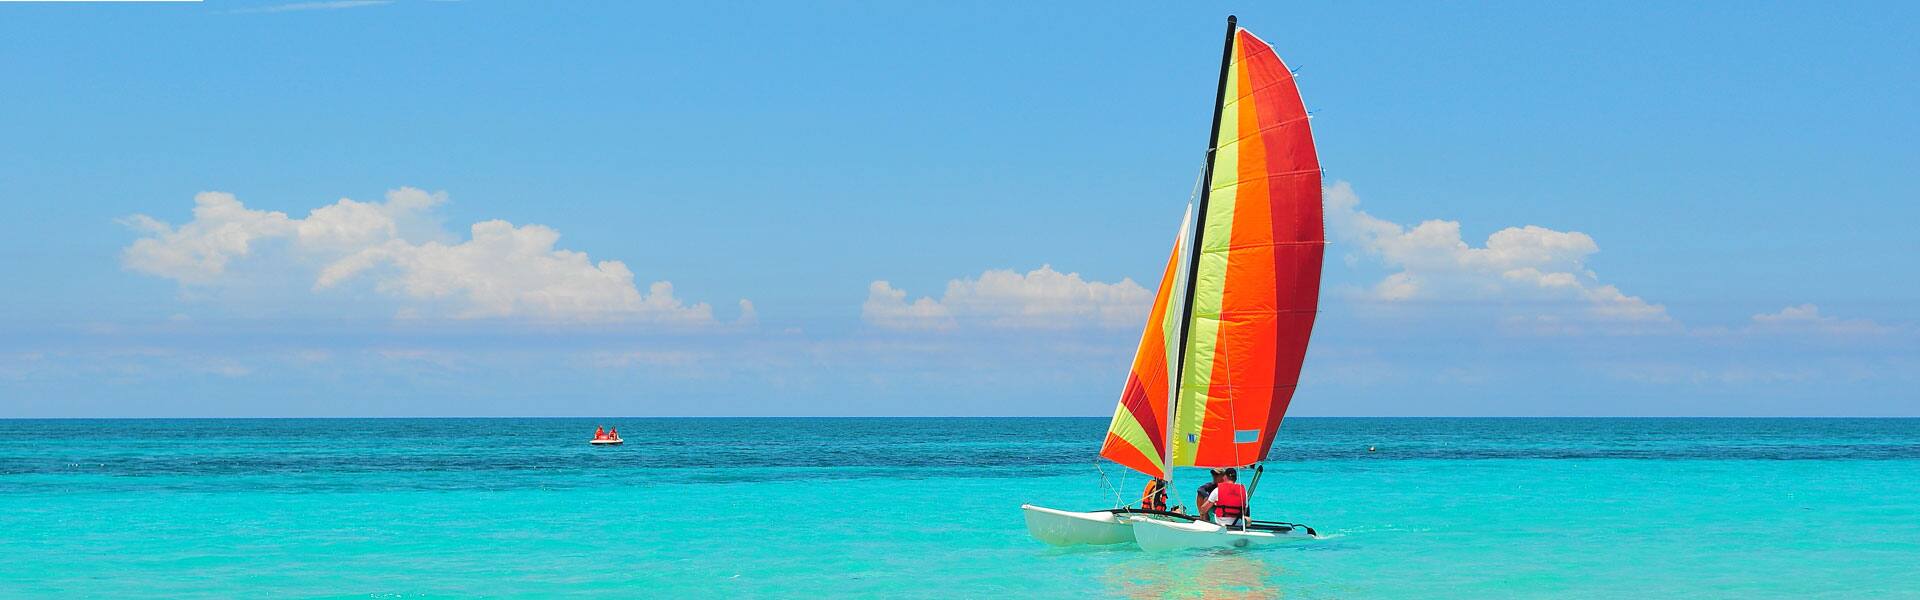 Bahamas: Great Stirrup Cay, Orlando y Nasáu